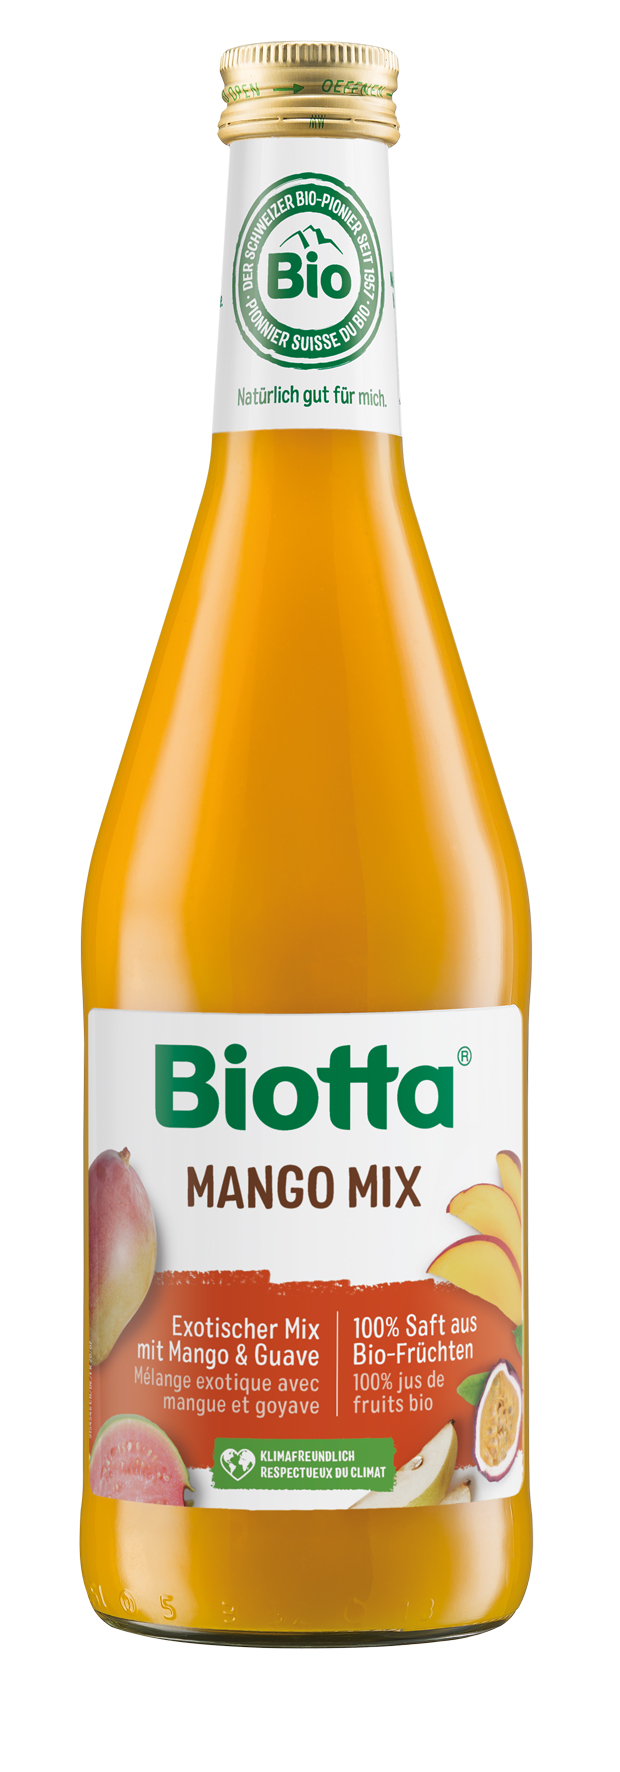 Biotta Mango mix bio 500ml